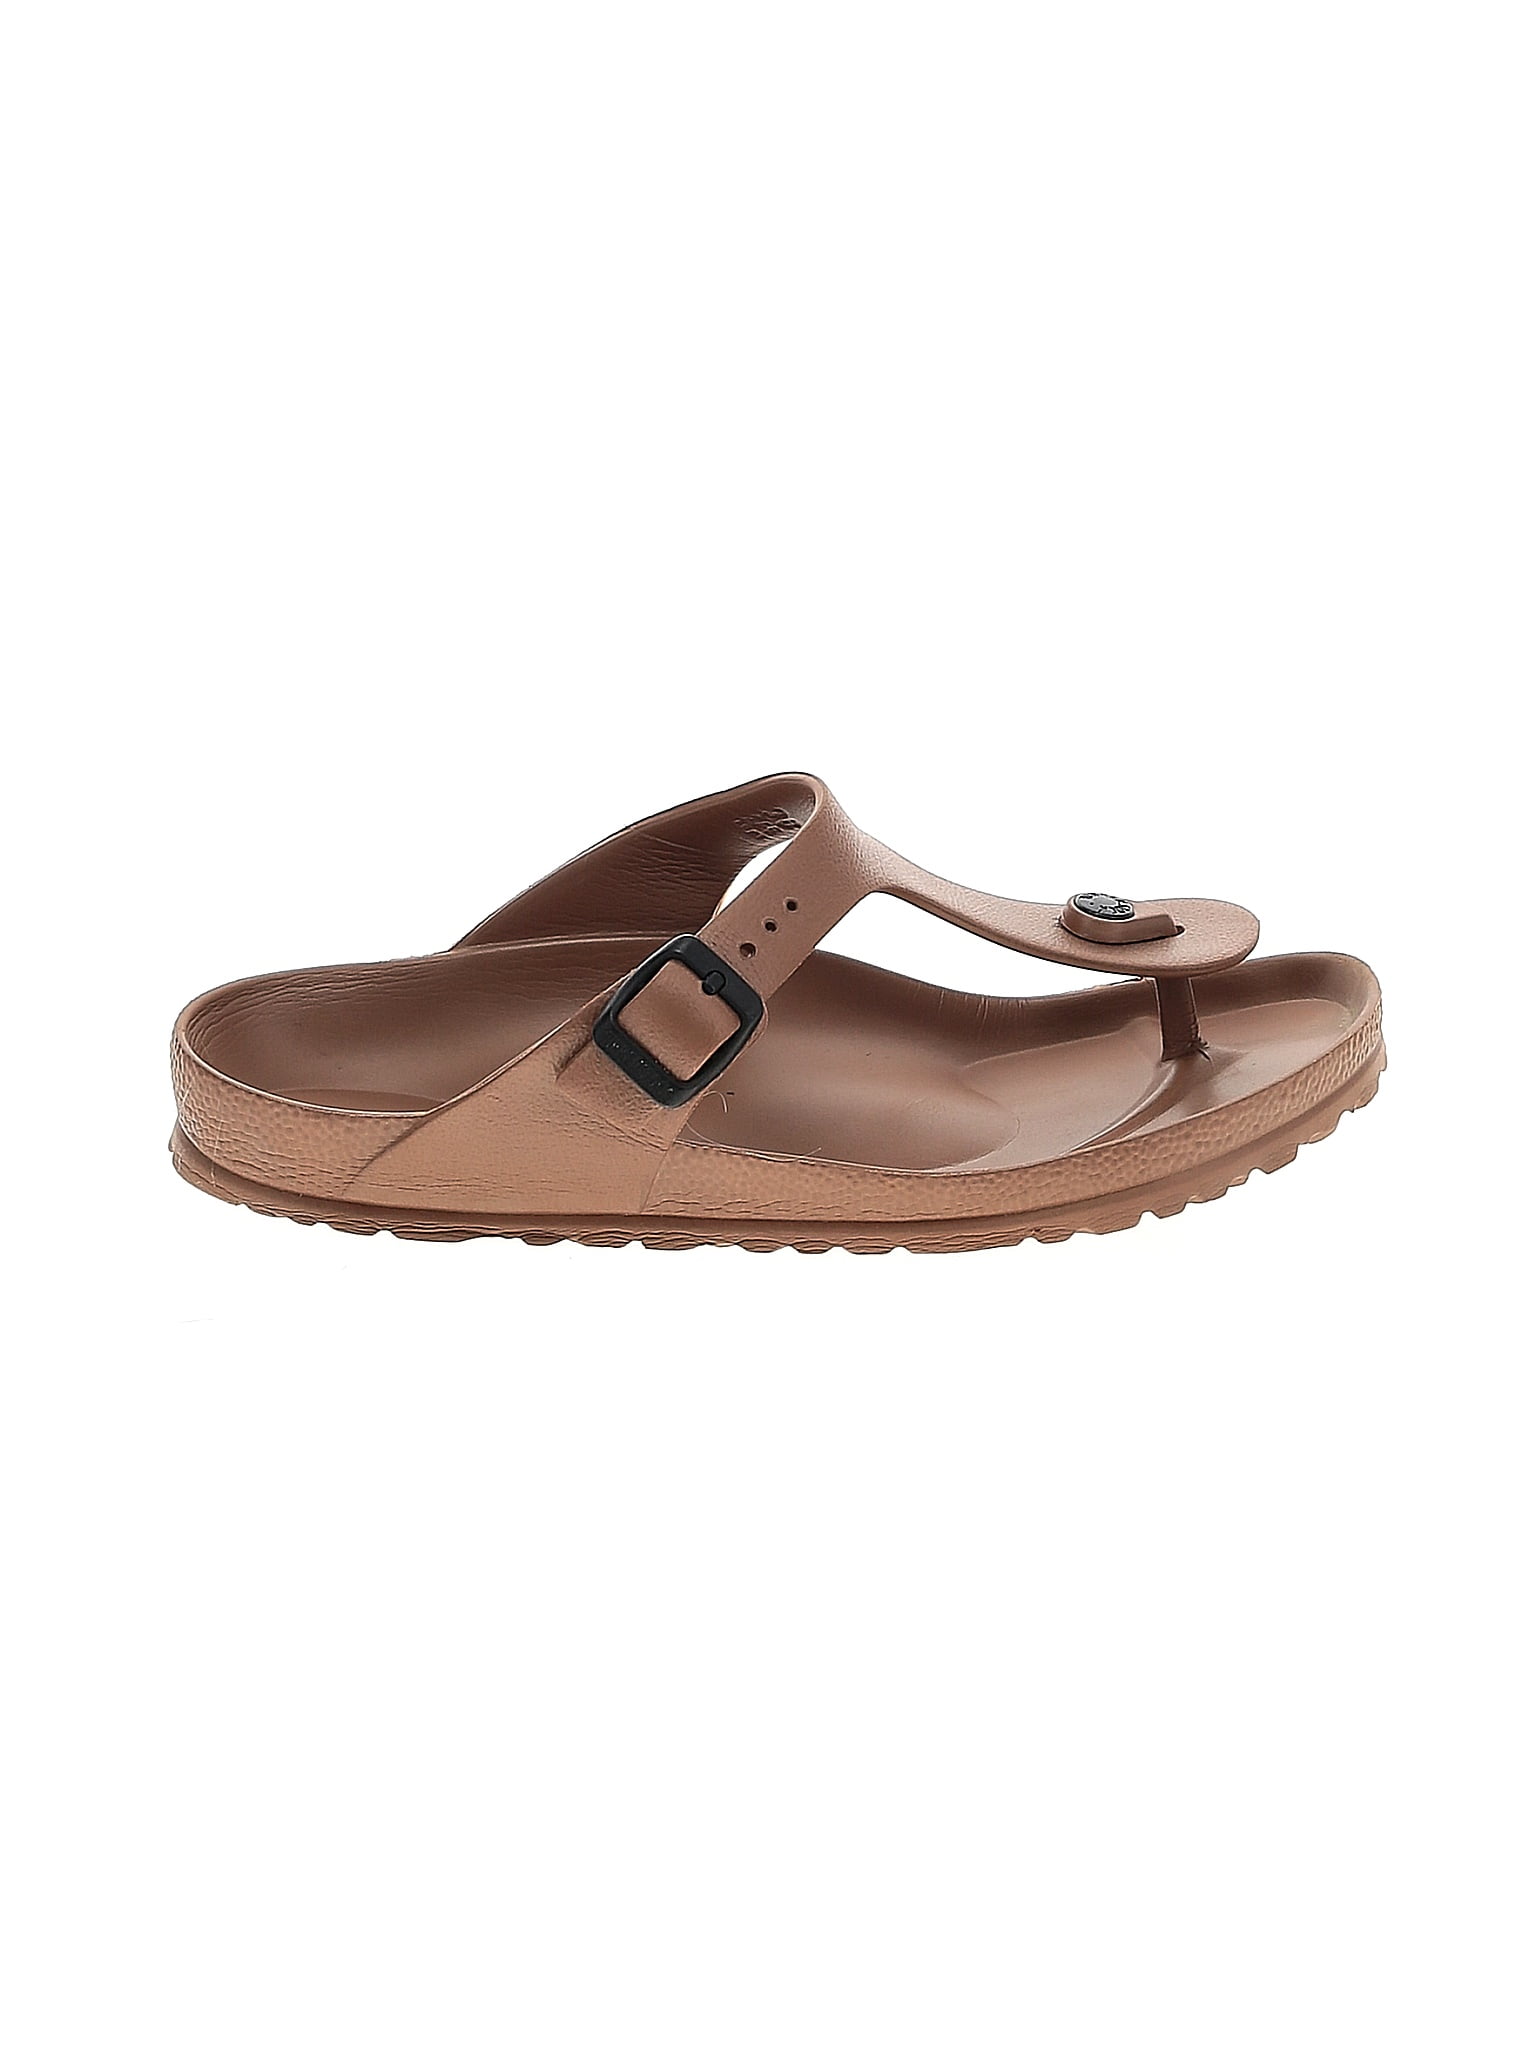 Birkenstock Solid Brown Tan Sandals Size 38 (EU) - 51% off | thredUP